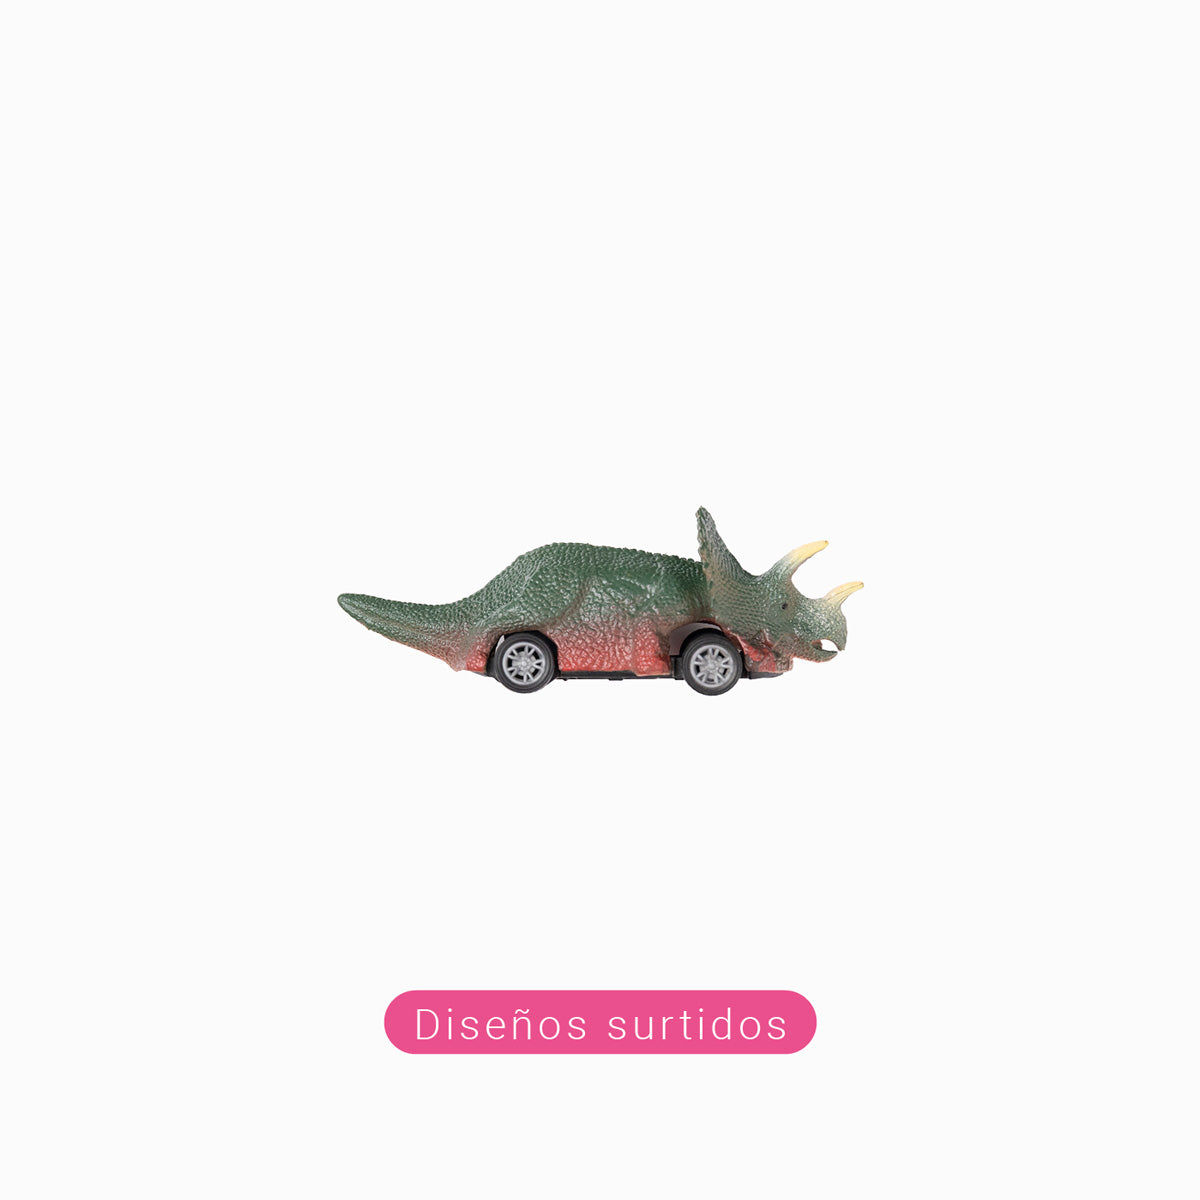 Designs de fornecedores de brinquedos de dinossauros piñata